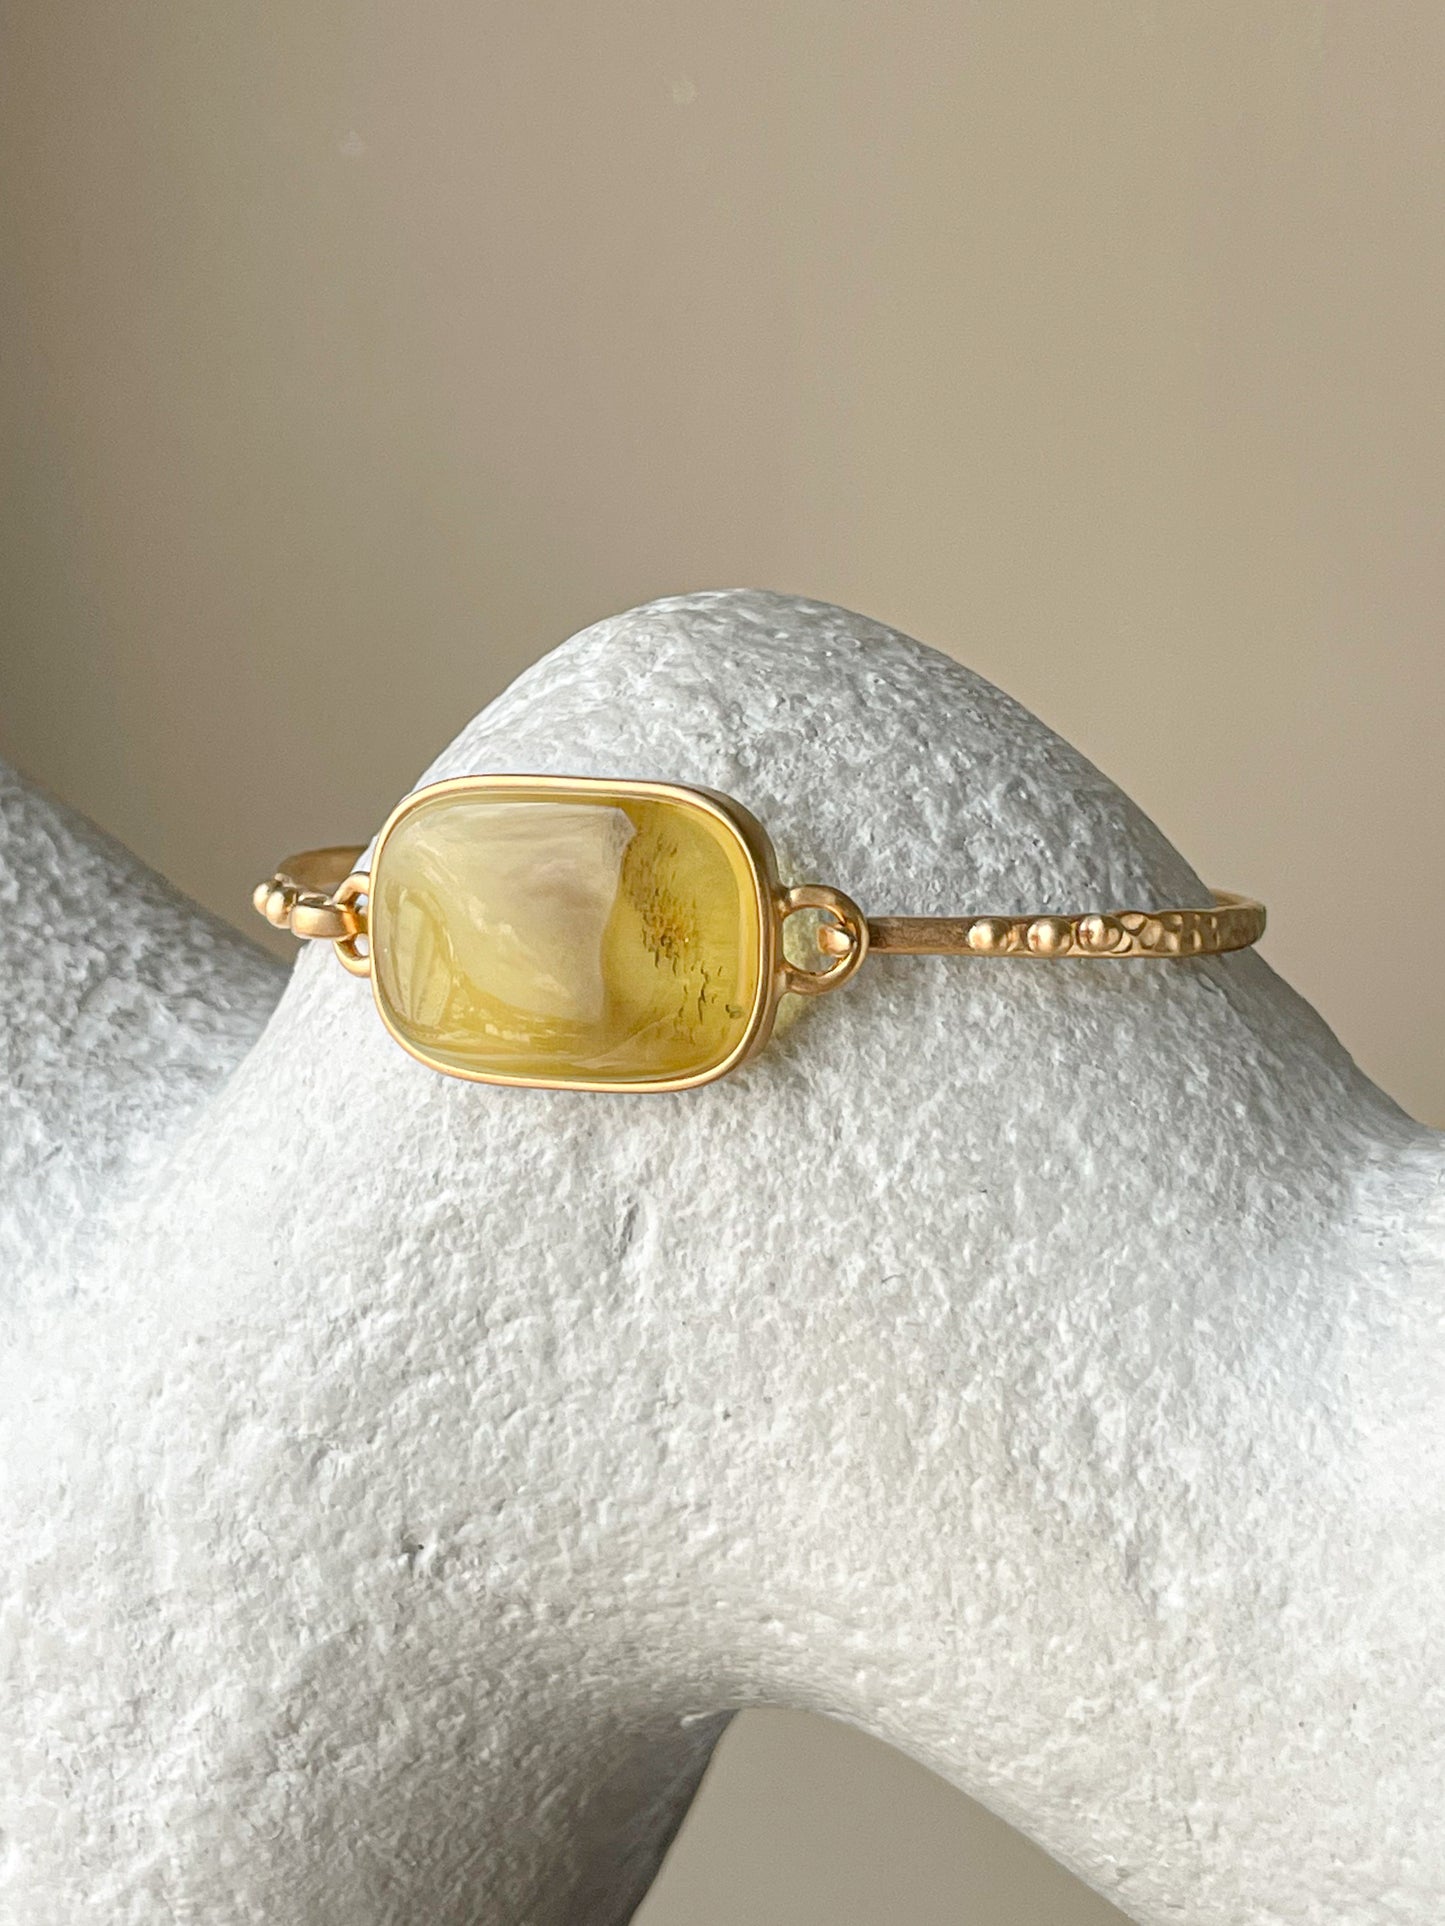 Amber bracelet - Gold plated silver - Bangle bracelet collection